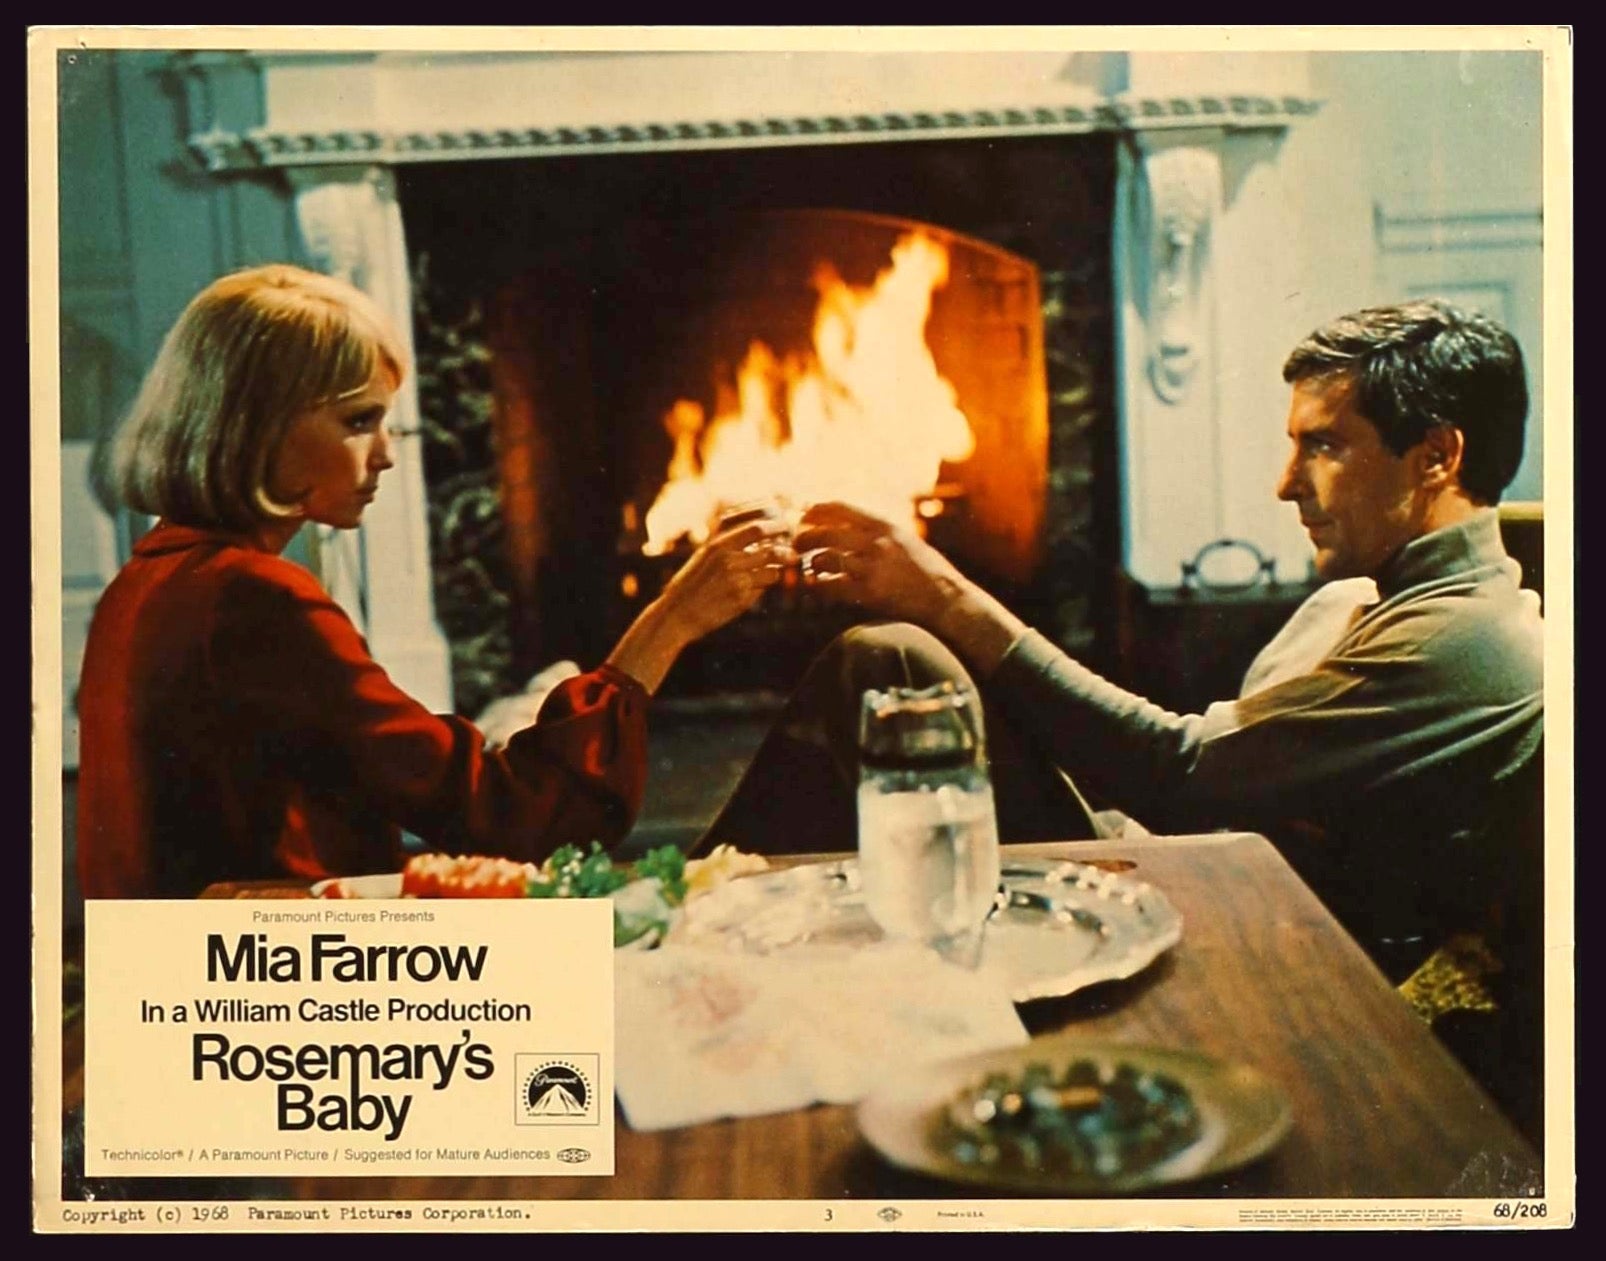 Rosemary's Baby (1968) original movie poster for sale at Original Film Art